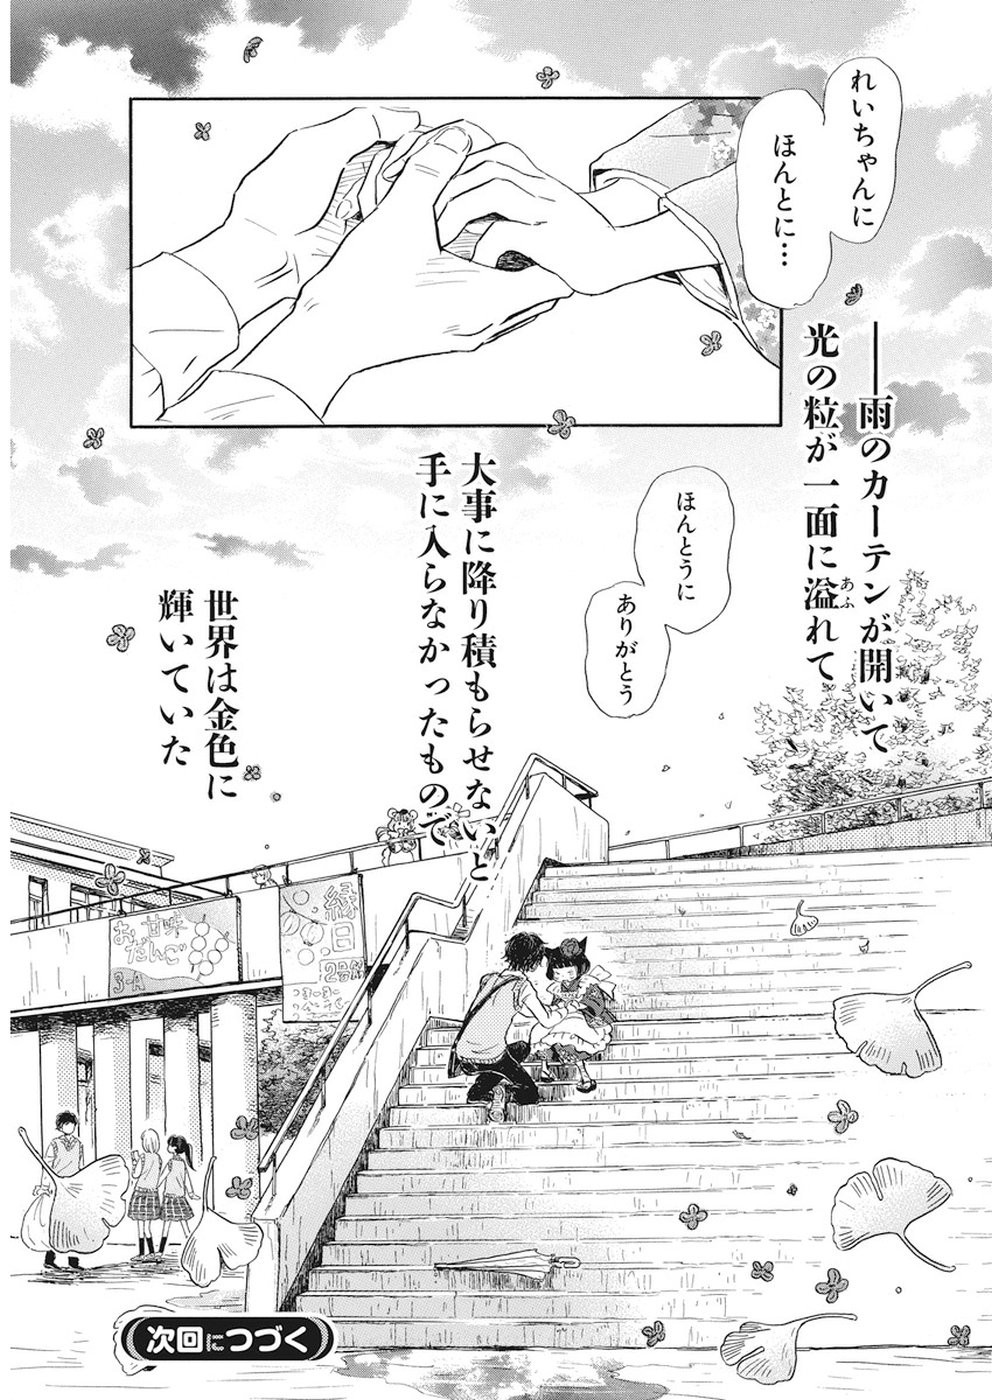 3 Gatsu no Lion - Chapter 153 - Page 15